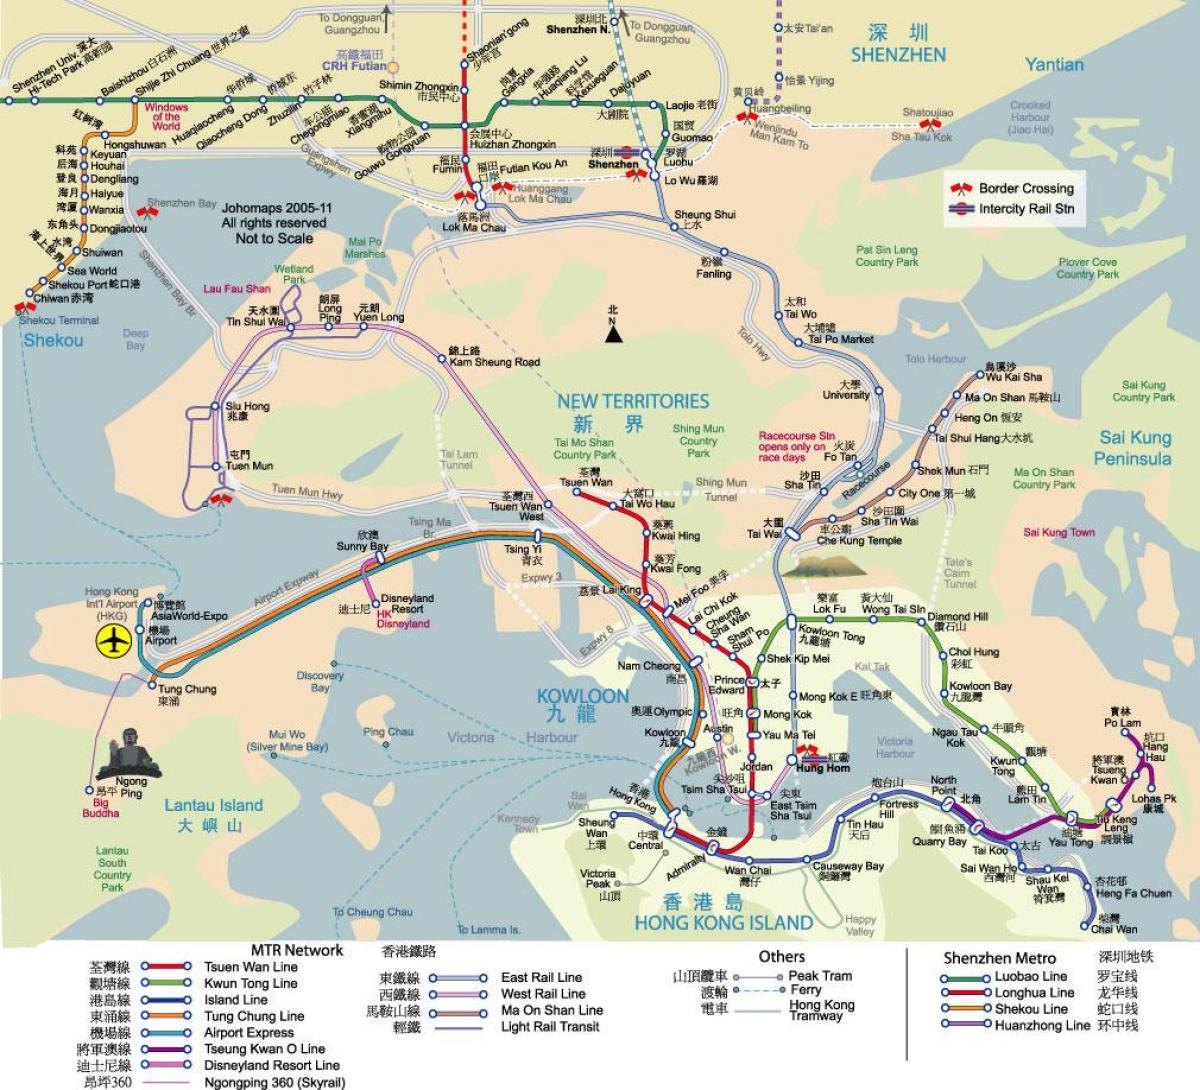 kort over Hong Kong transit